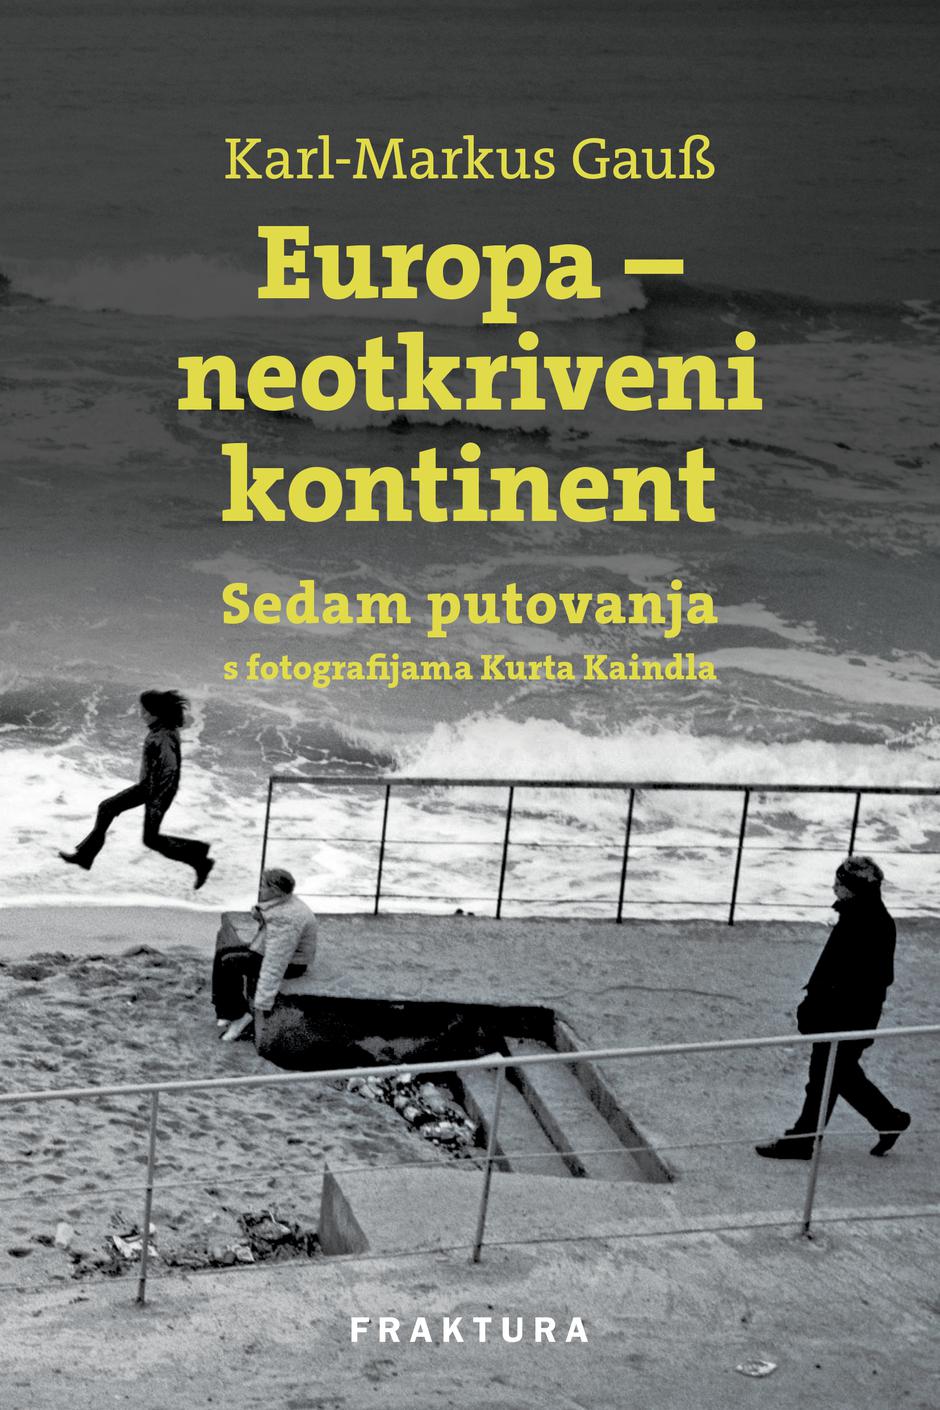 Knjiga "Europa - neotkriveni kontinent" Karl-Markusa Gaussa | Author: Fraktura